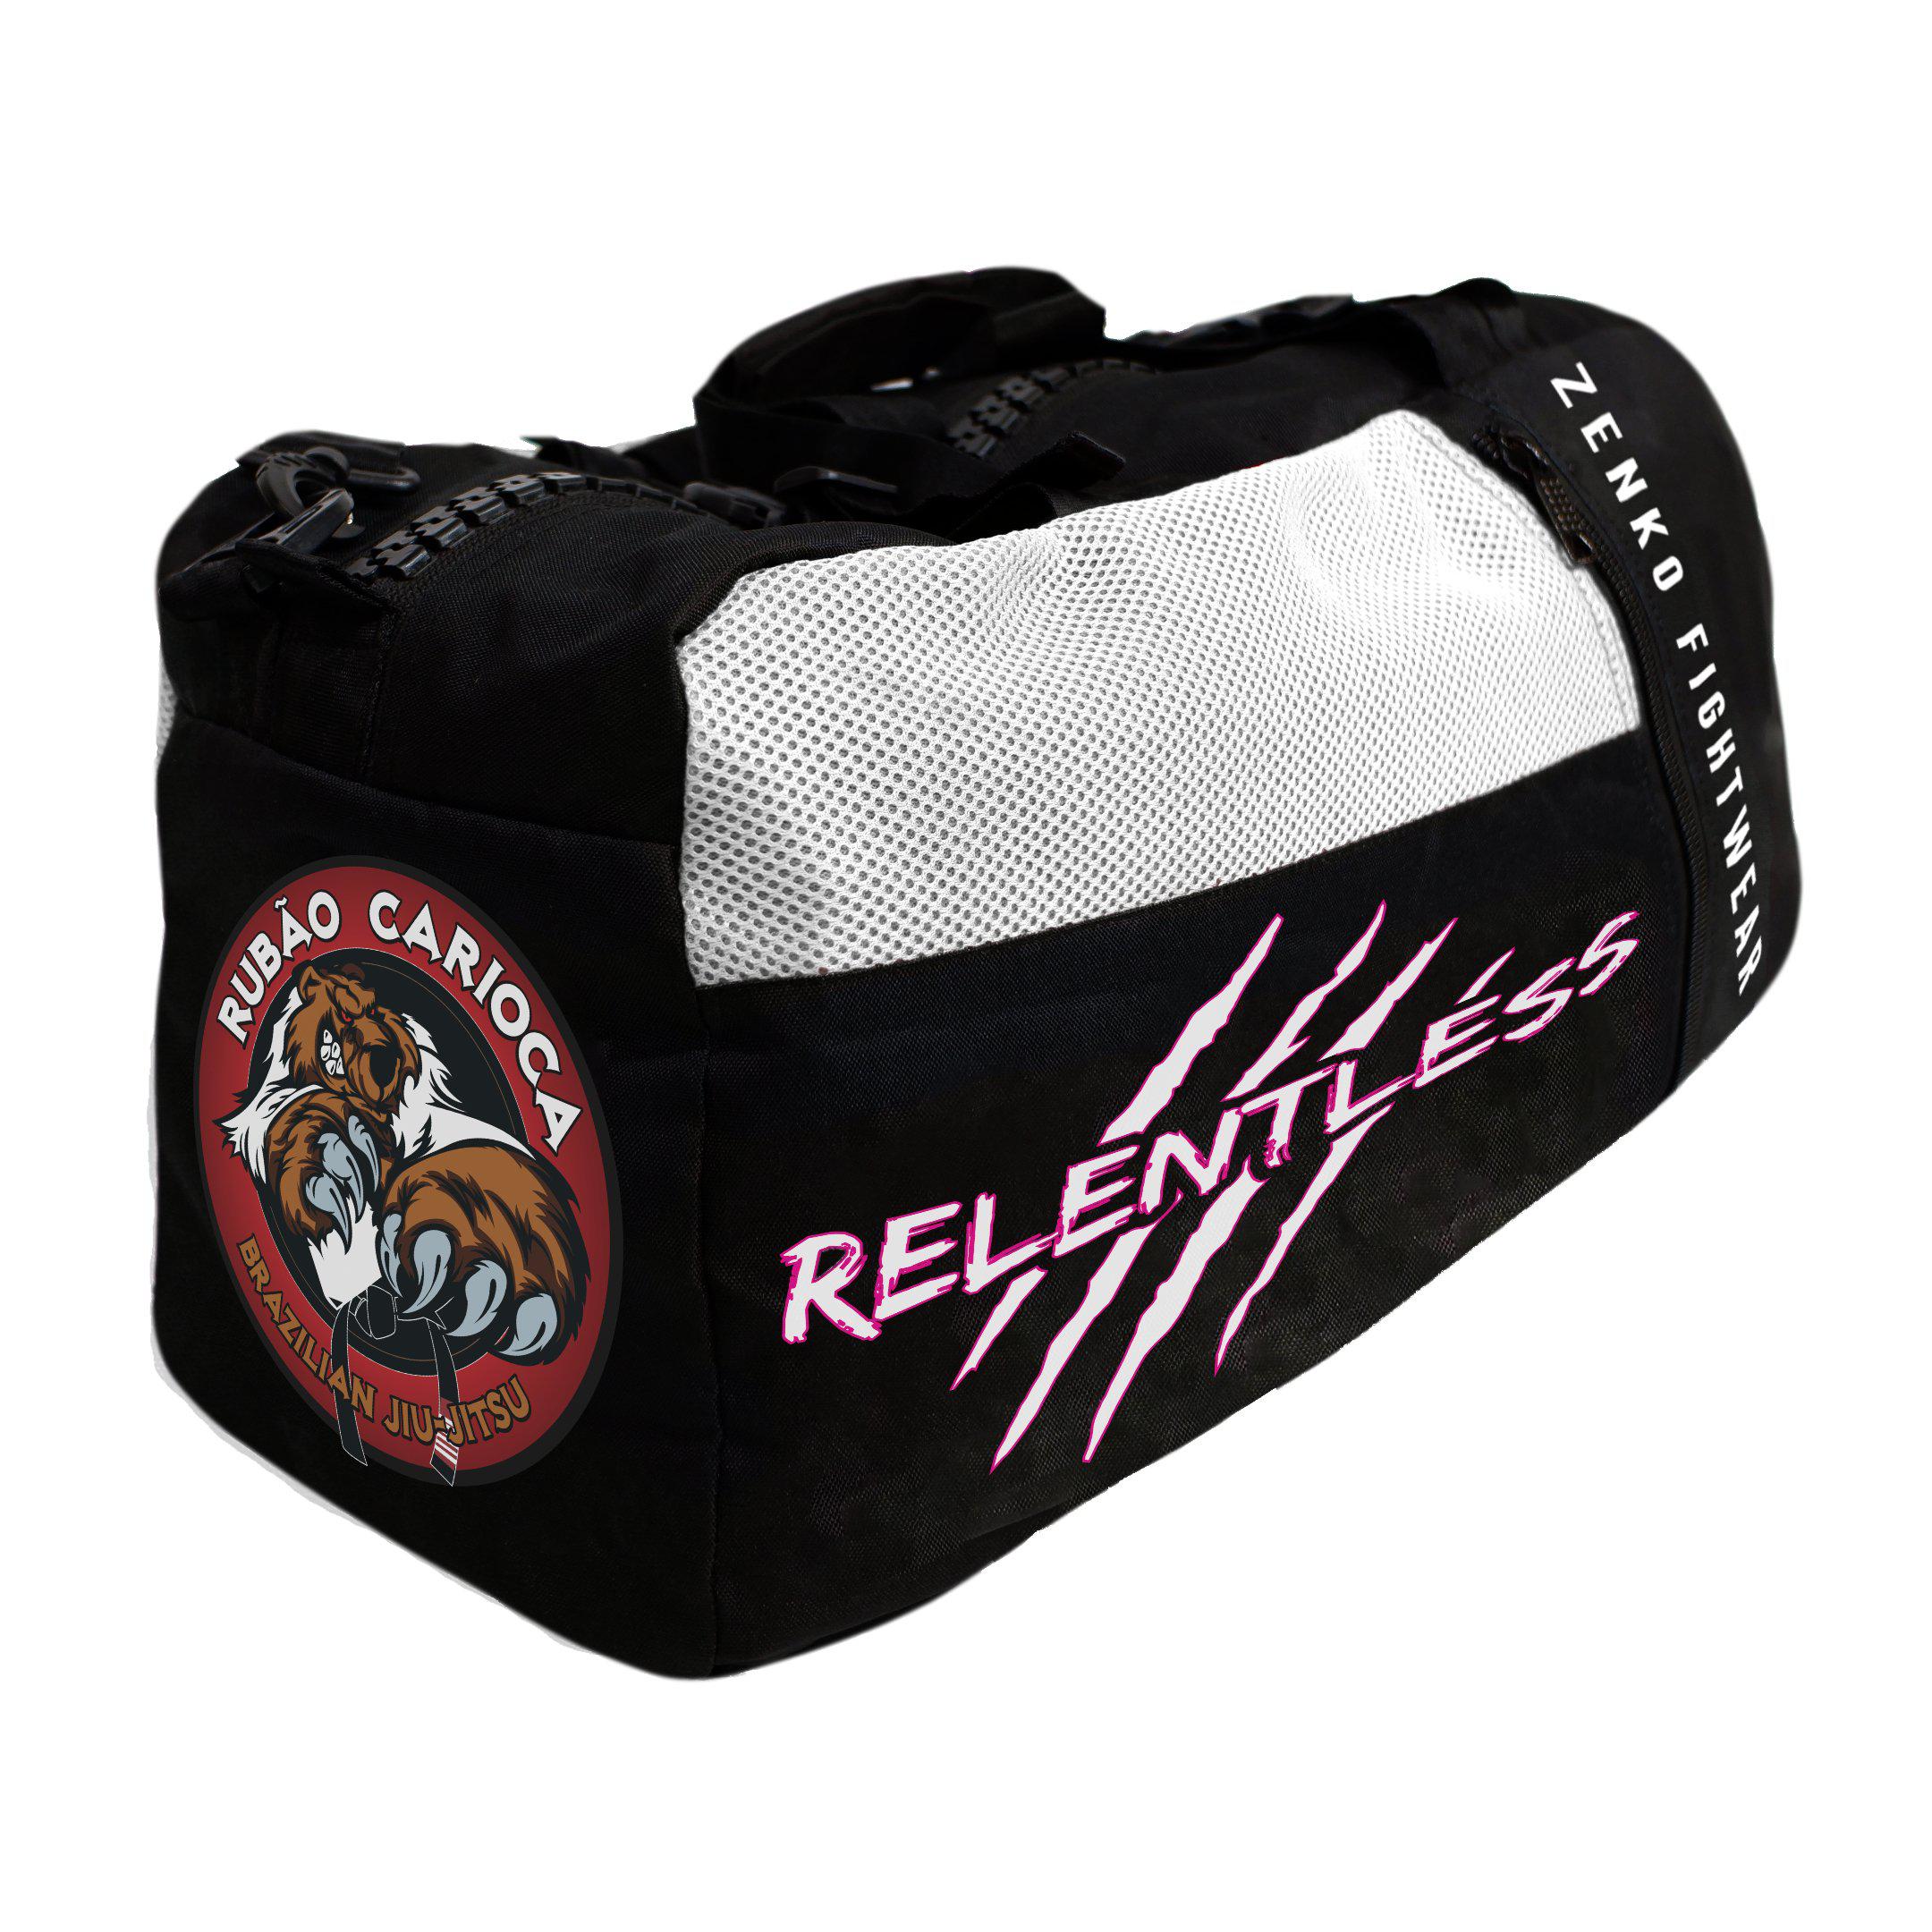 Relentless Martial Arts Gear Bag - Zenko Fightwear